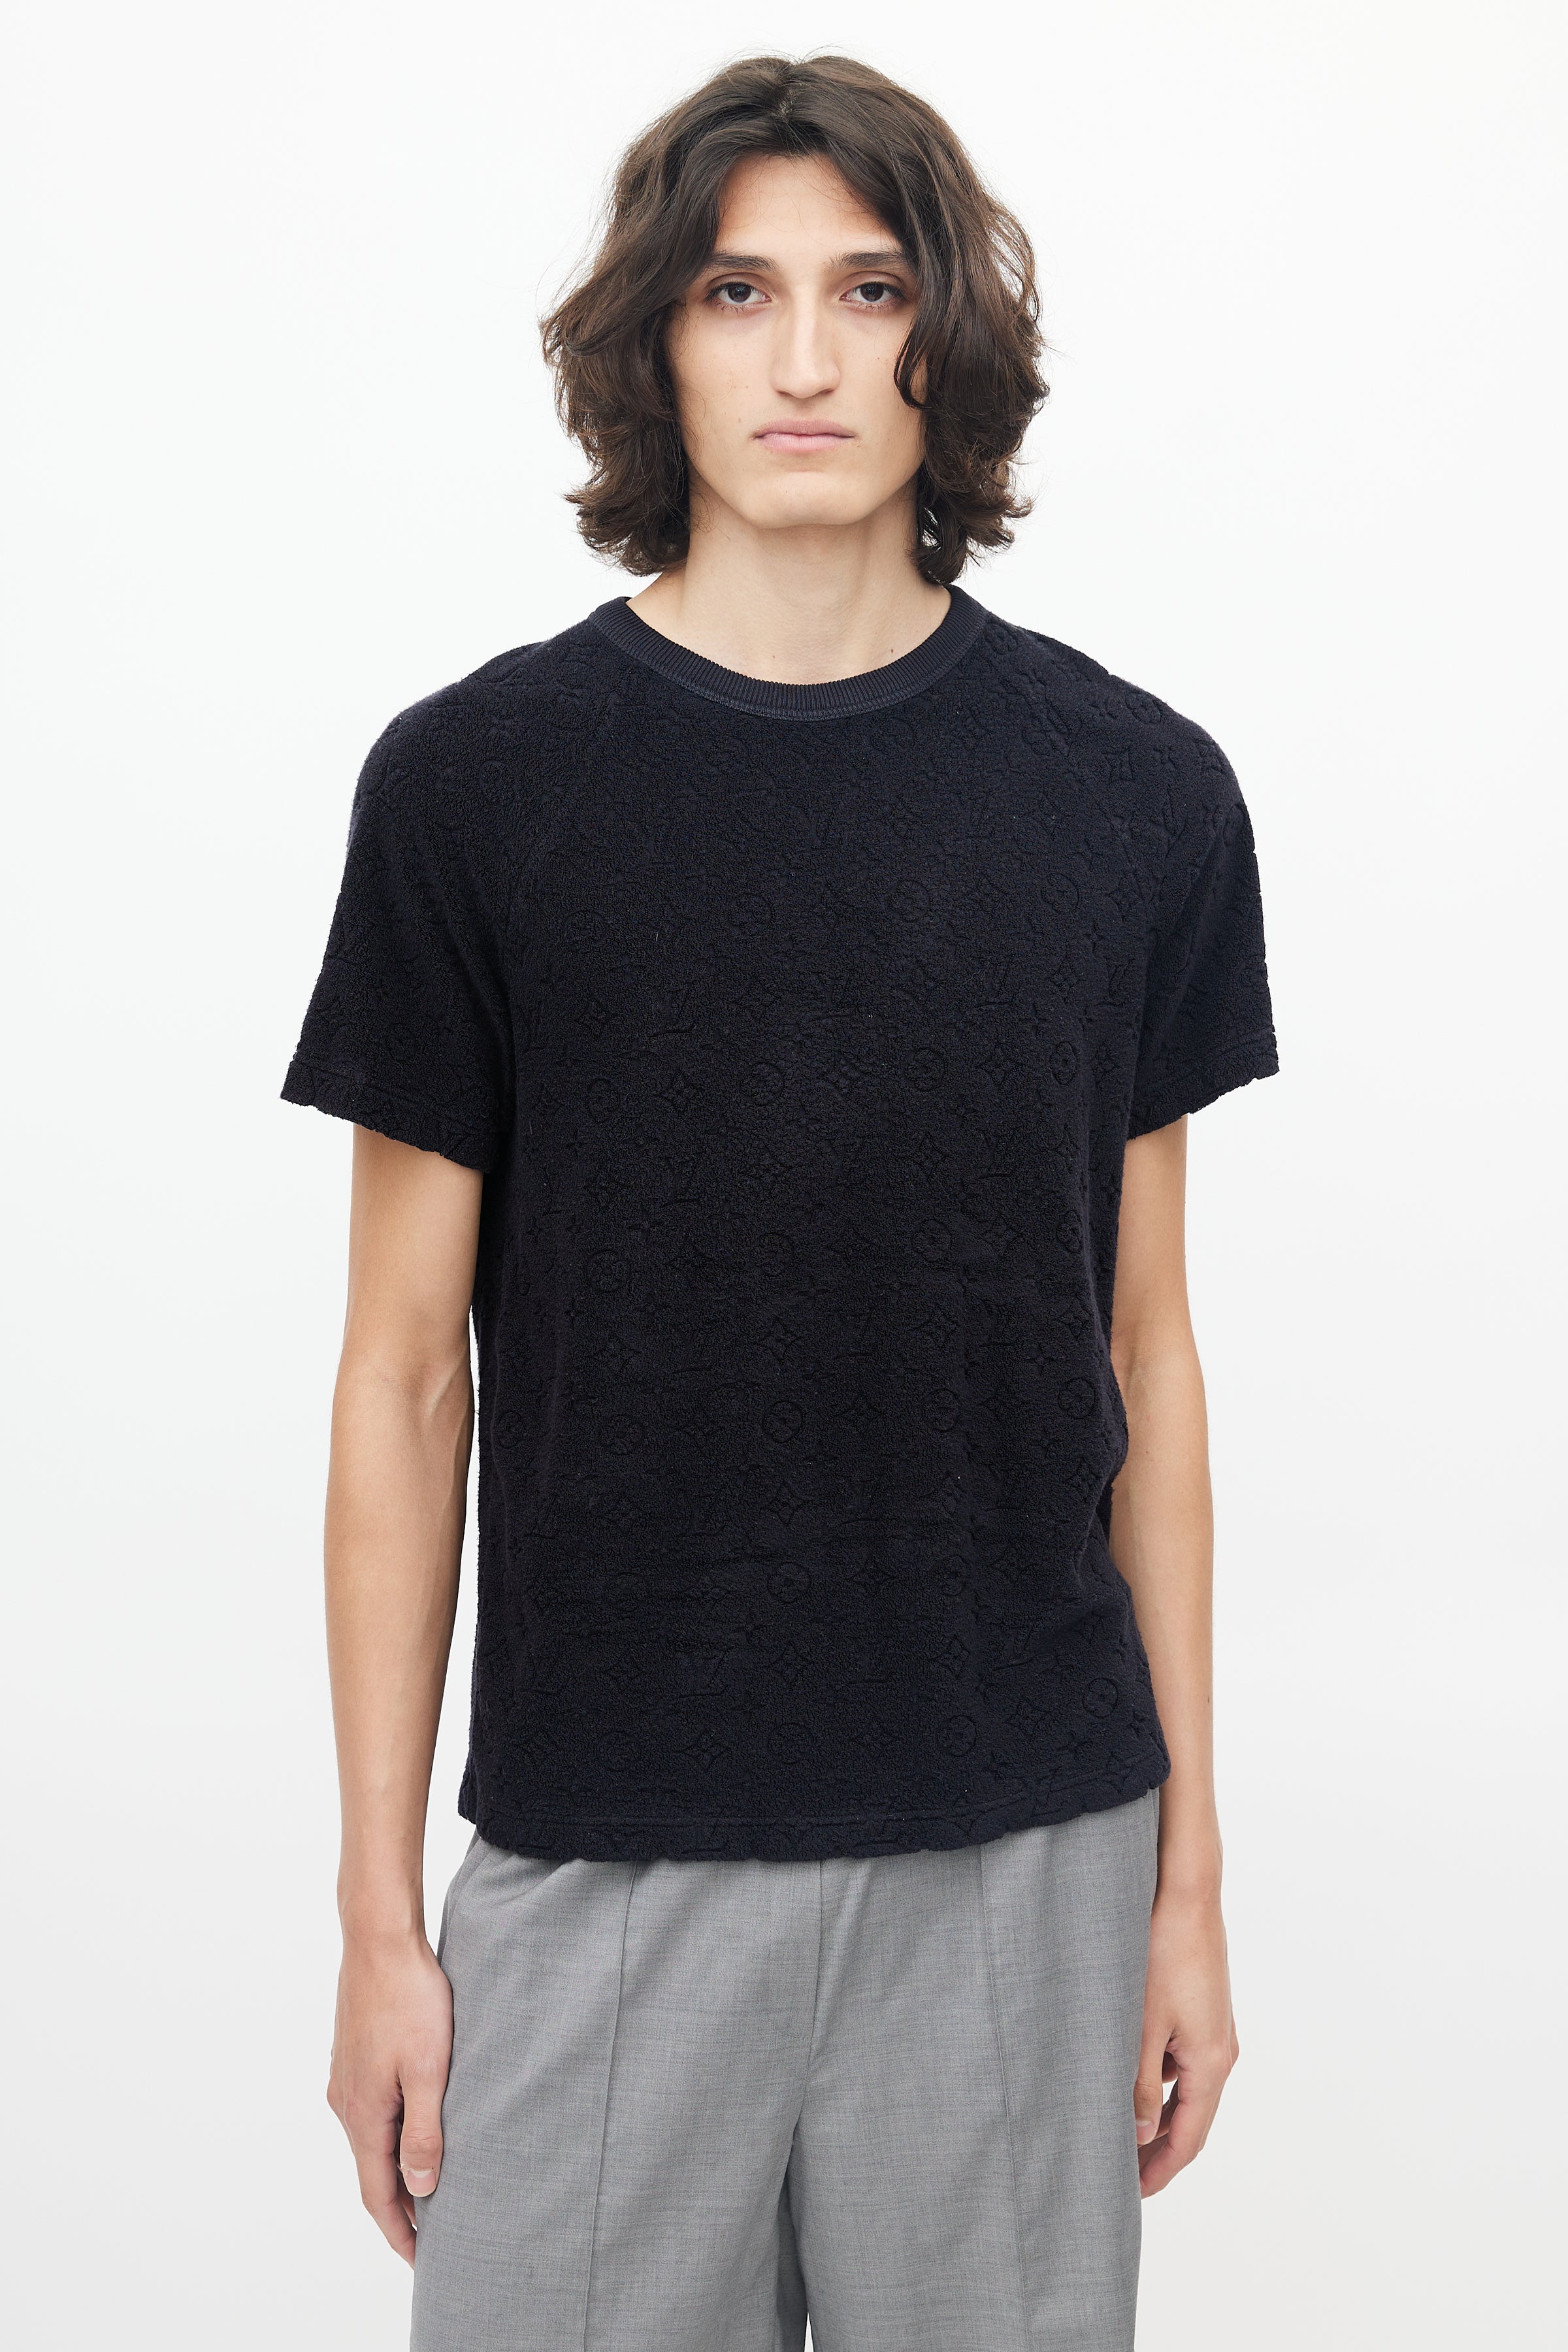 Louis Vuitton - Authenticated T-Shirt - Cotton Black for Men, Very Good Condition